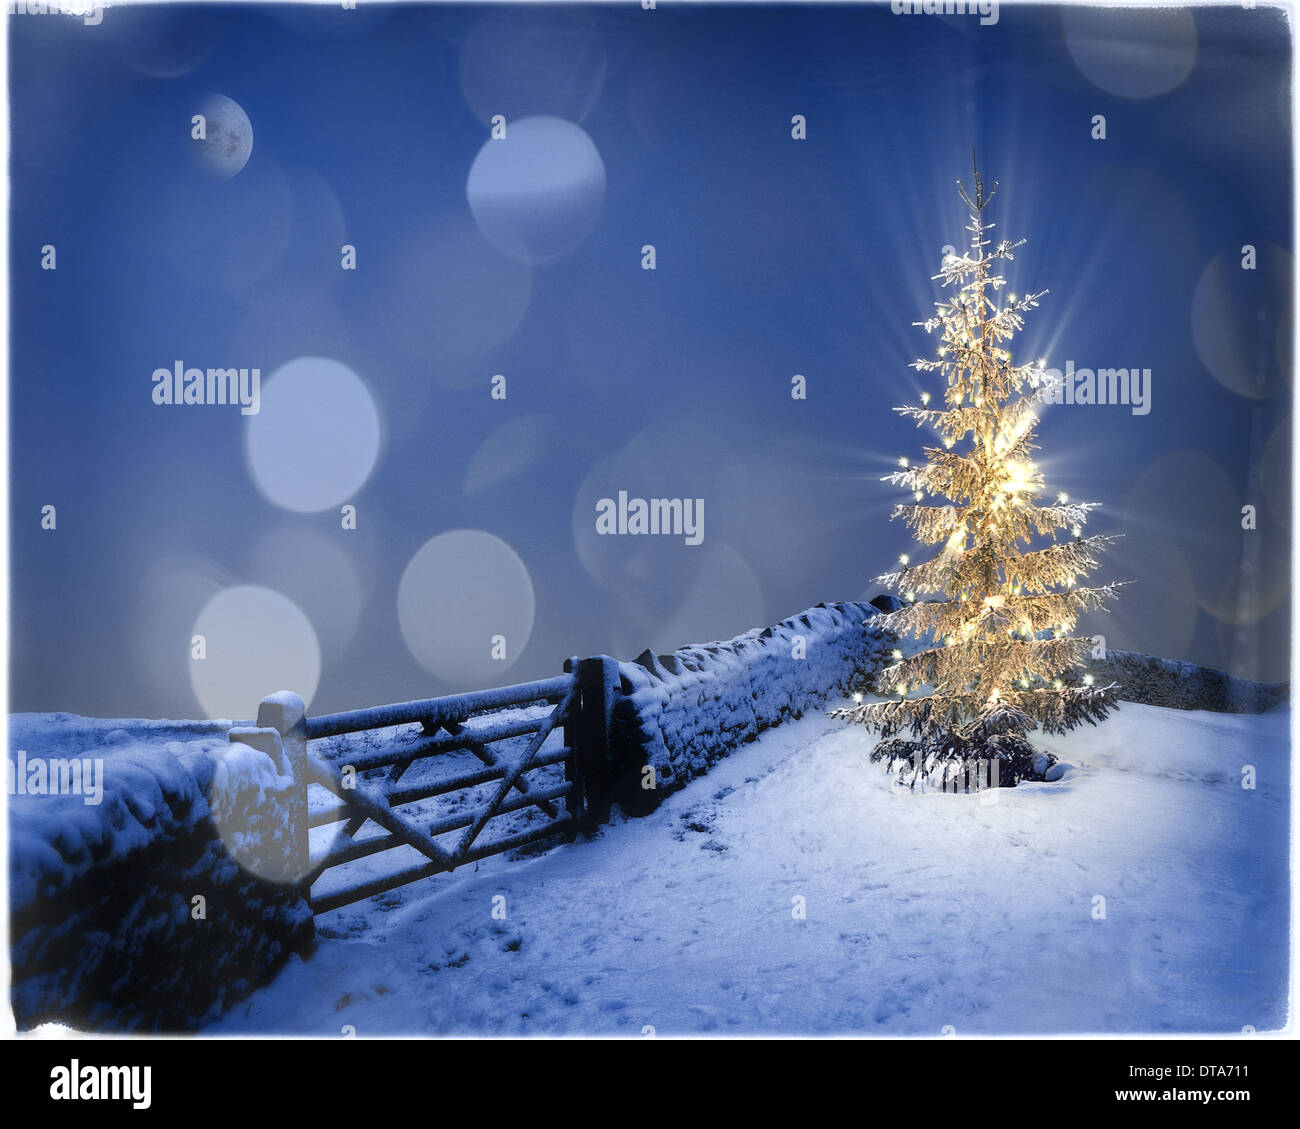 GB - GLOUCESTERSHIRE: Weihnachten in der dunkel (digitale Kunst) Stockfoto